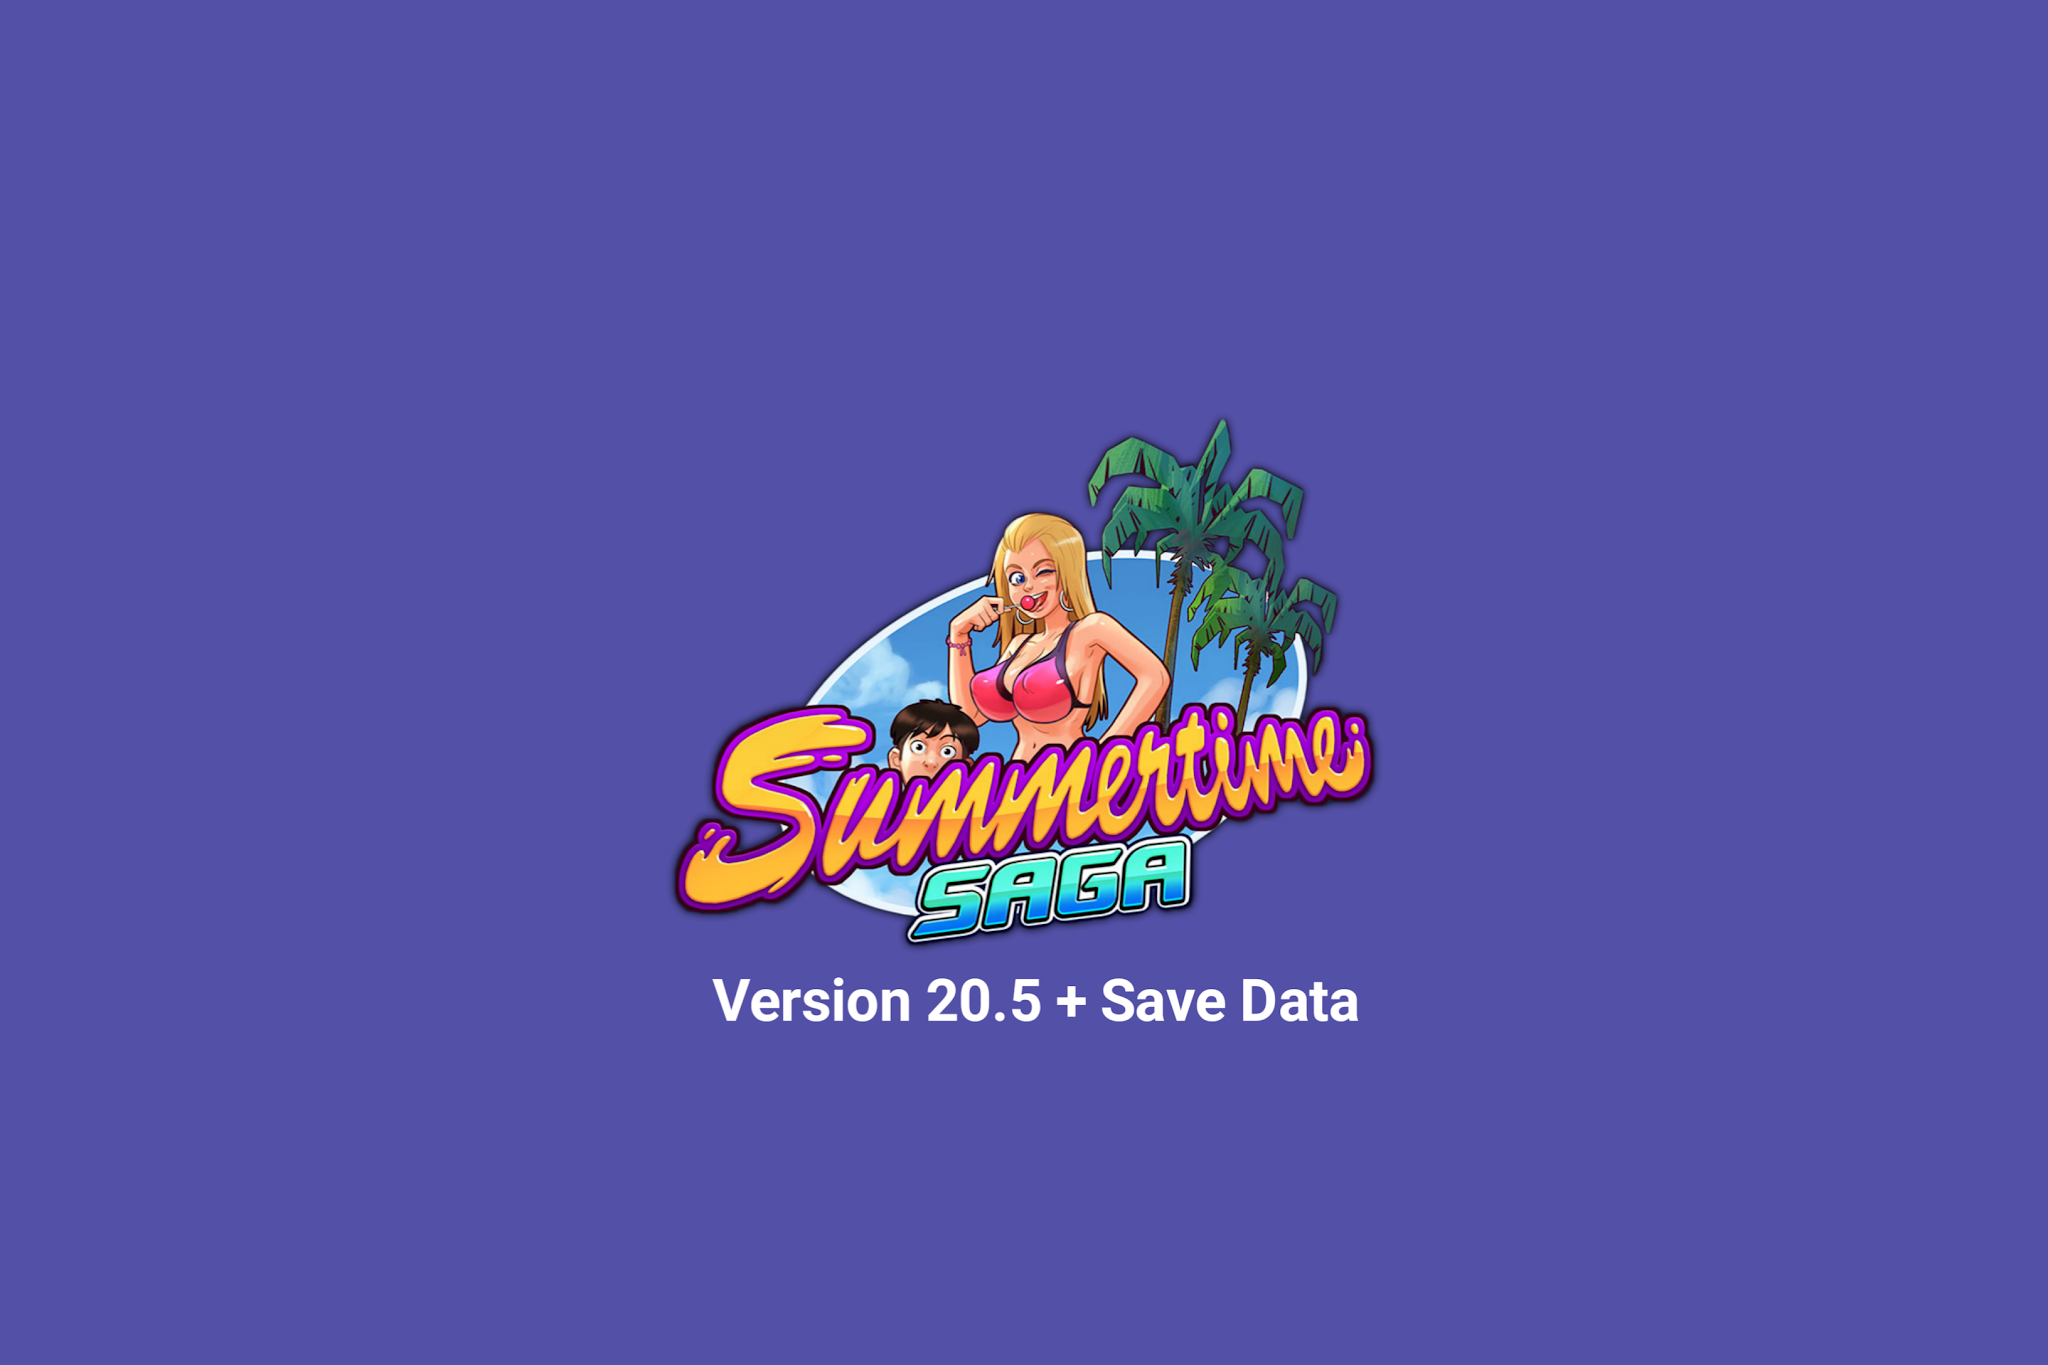 New Release! Summertime Saga Version 20.5 + Save Data